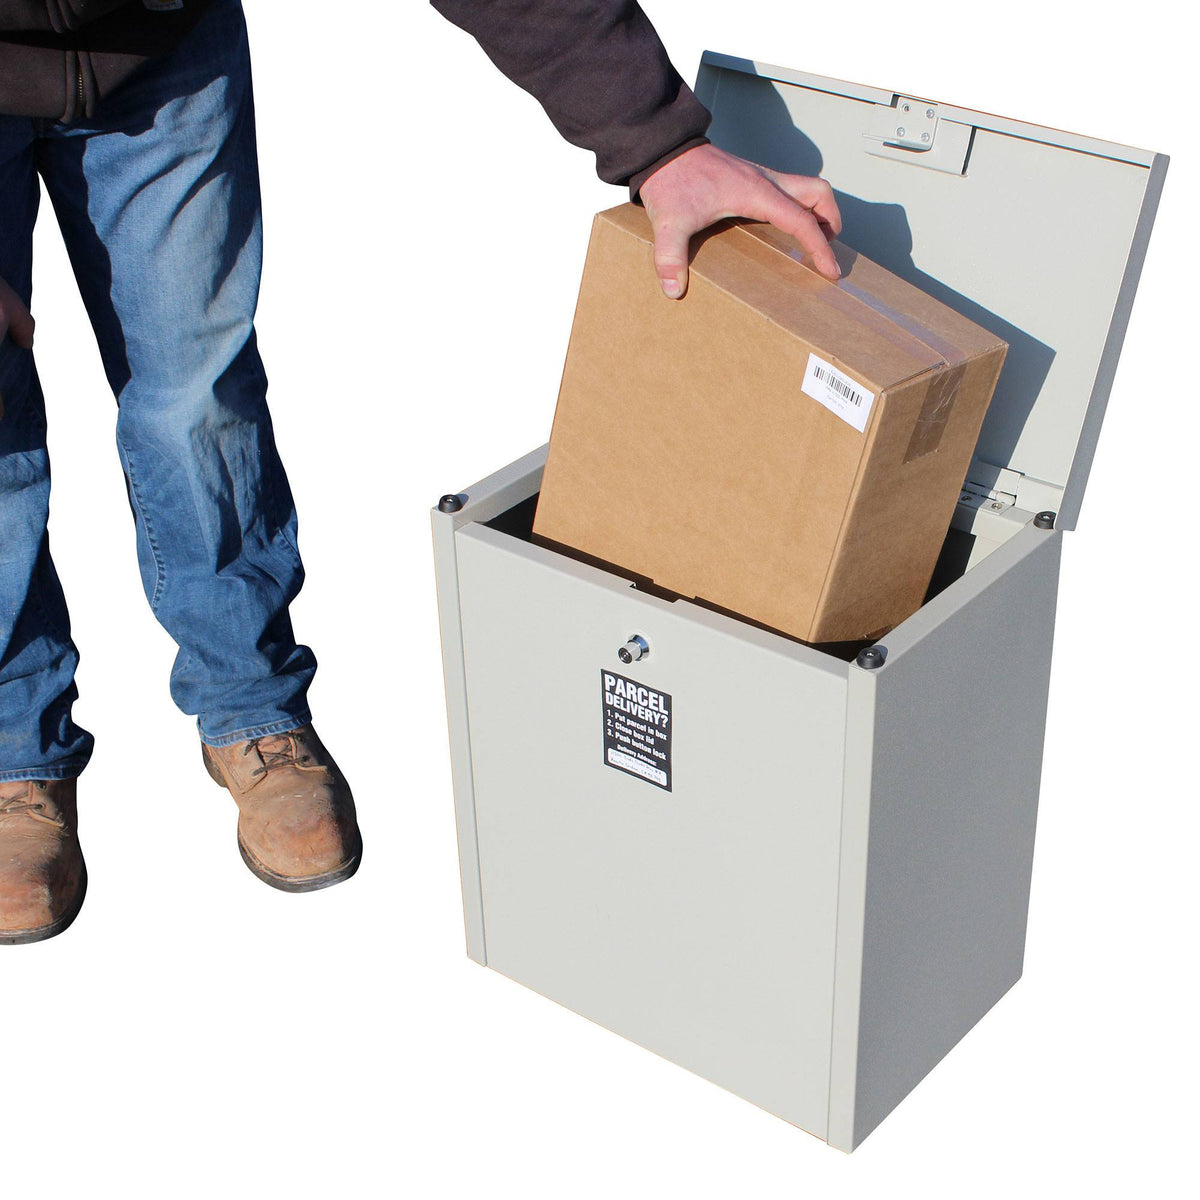 Qualarc PCSDB-MD Parcel Chest Secure Delivery Box (Medium Size)